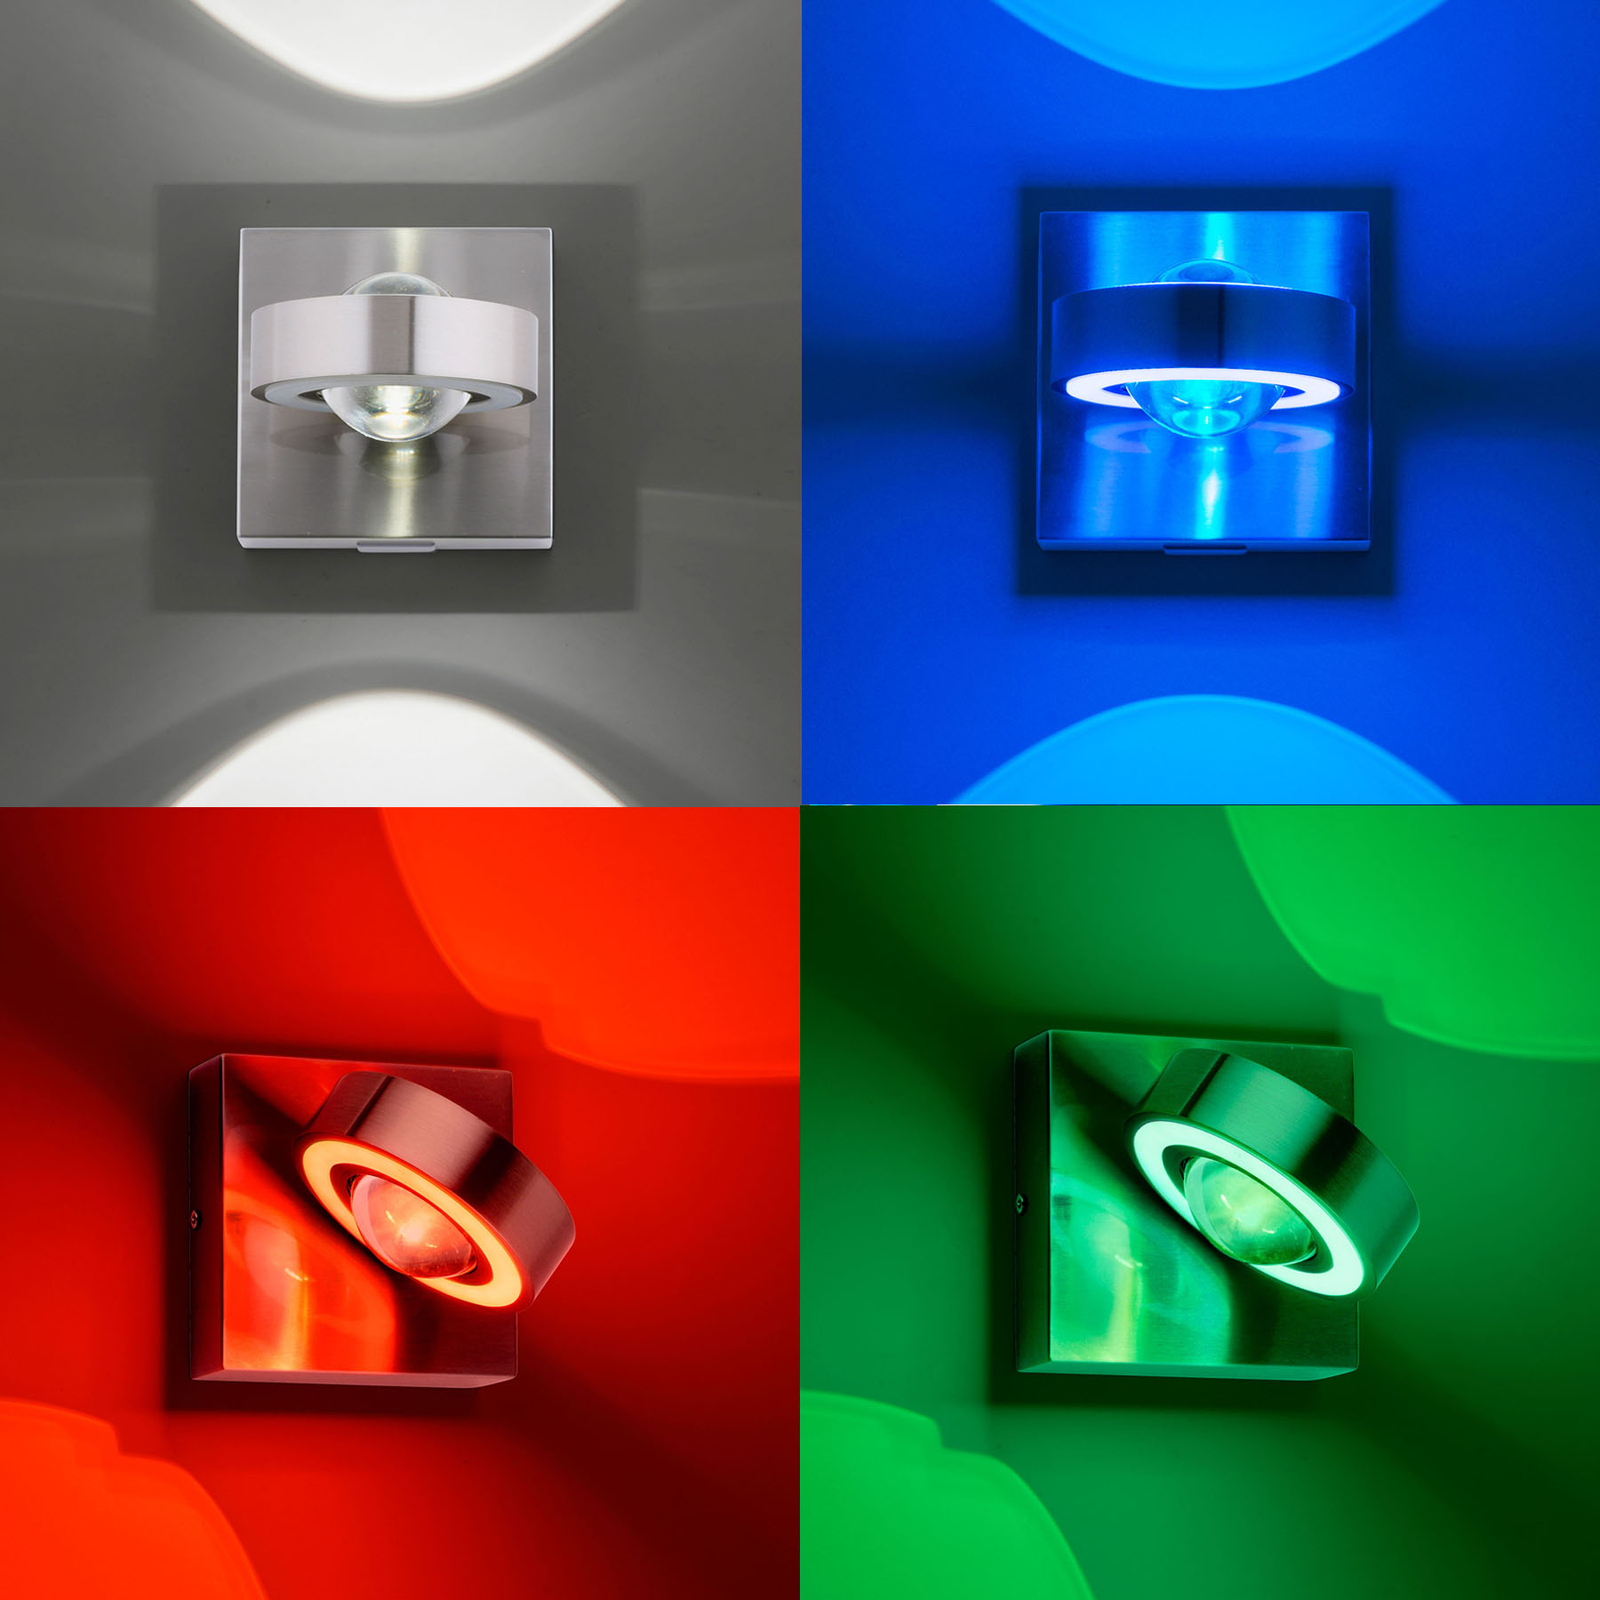 Paul Neuhaus Q-MIA LED fali lámpa, acél